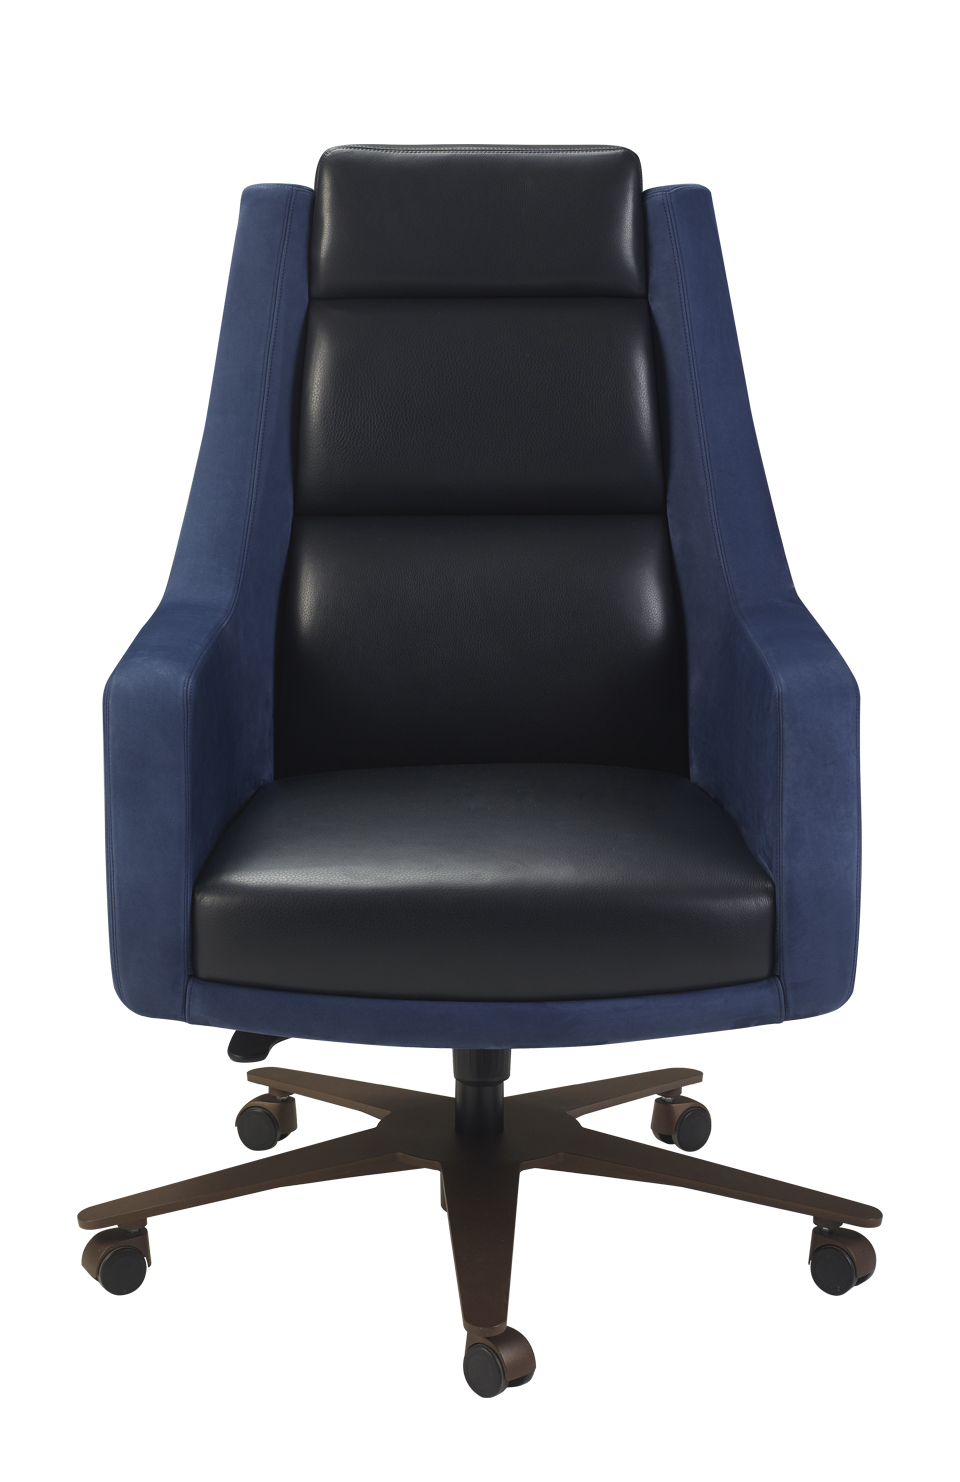 Kate — офисное кресло с металлическим основанием и обивкой из кожи и ткани из коллекции Amaranthine Tales компании Promemoria | Promemoria